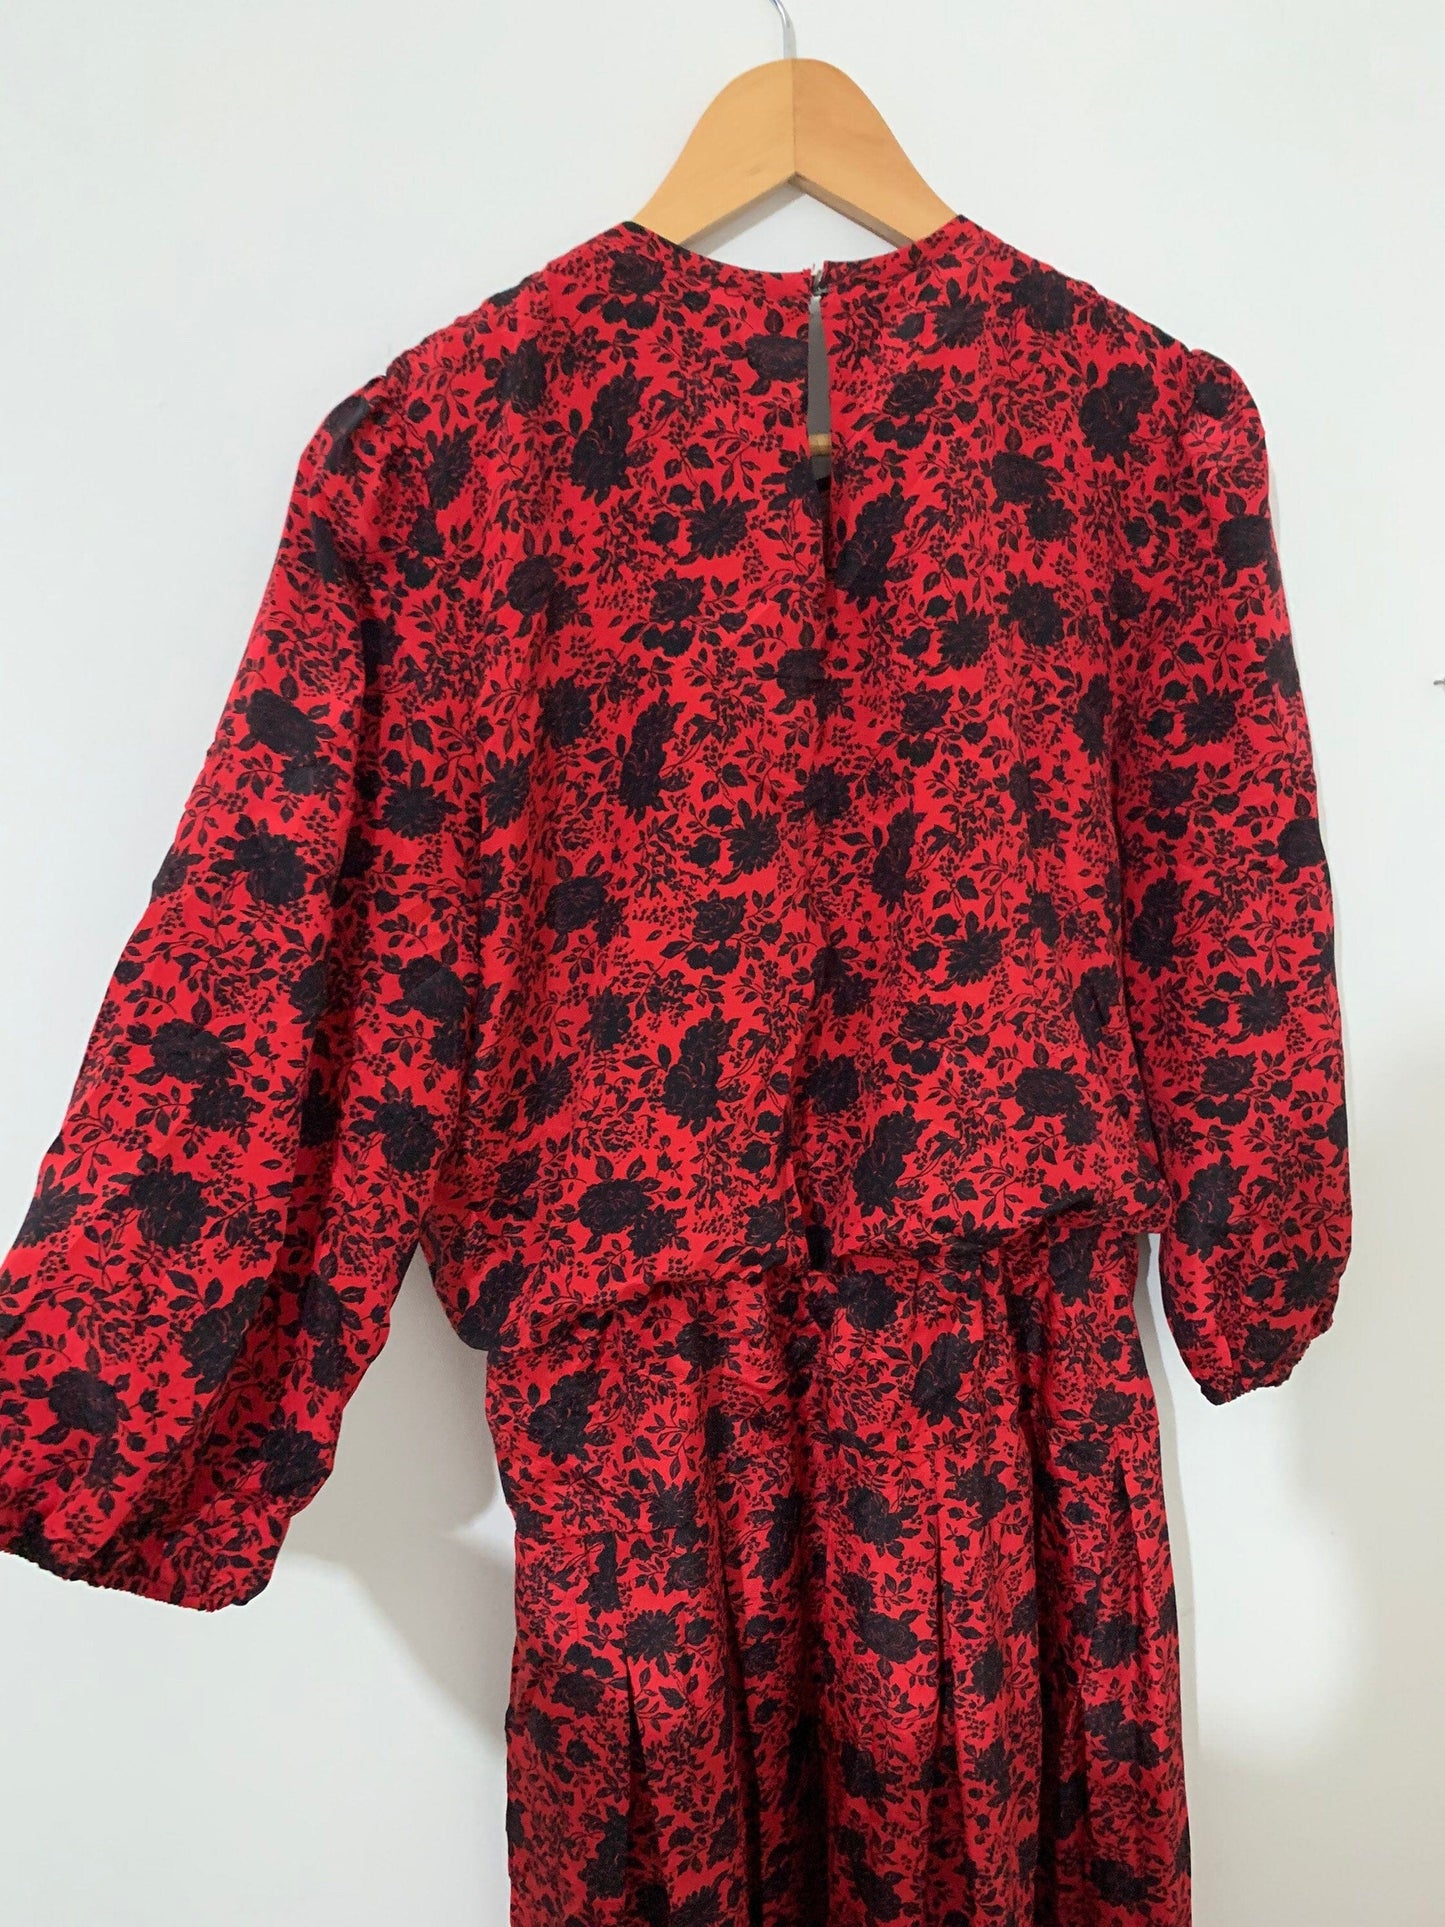 Vintage 1980s red and black dress vintage  - Day Dress  floral pattern dress Rare Plus Size eu 42 size 16 red voluptuous vintage